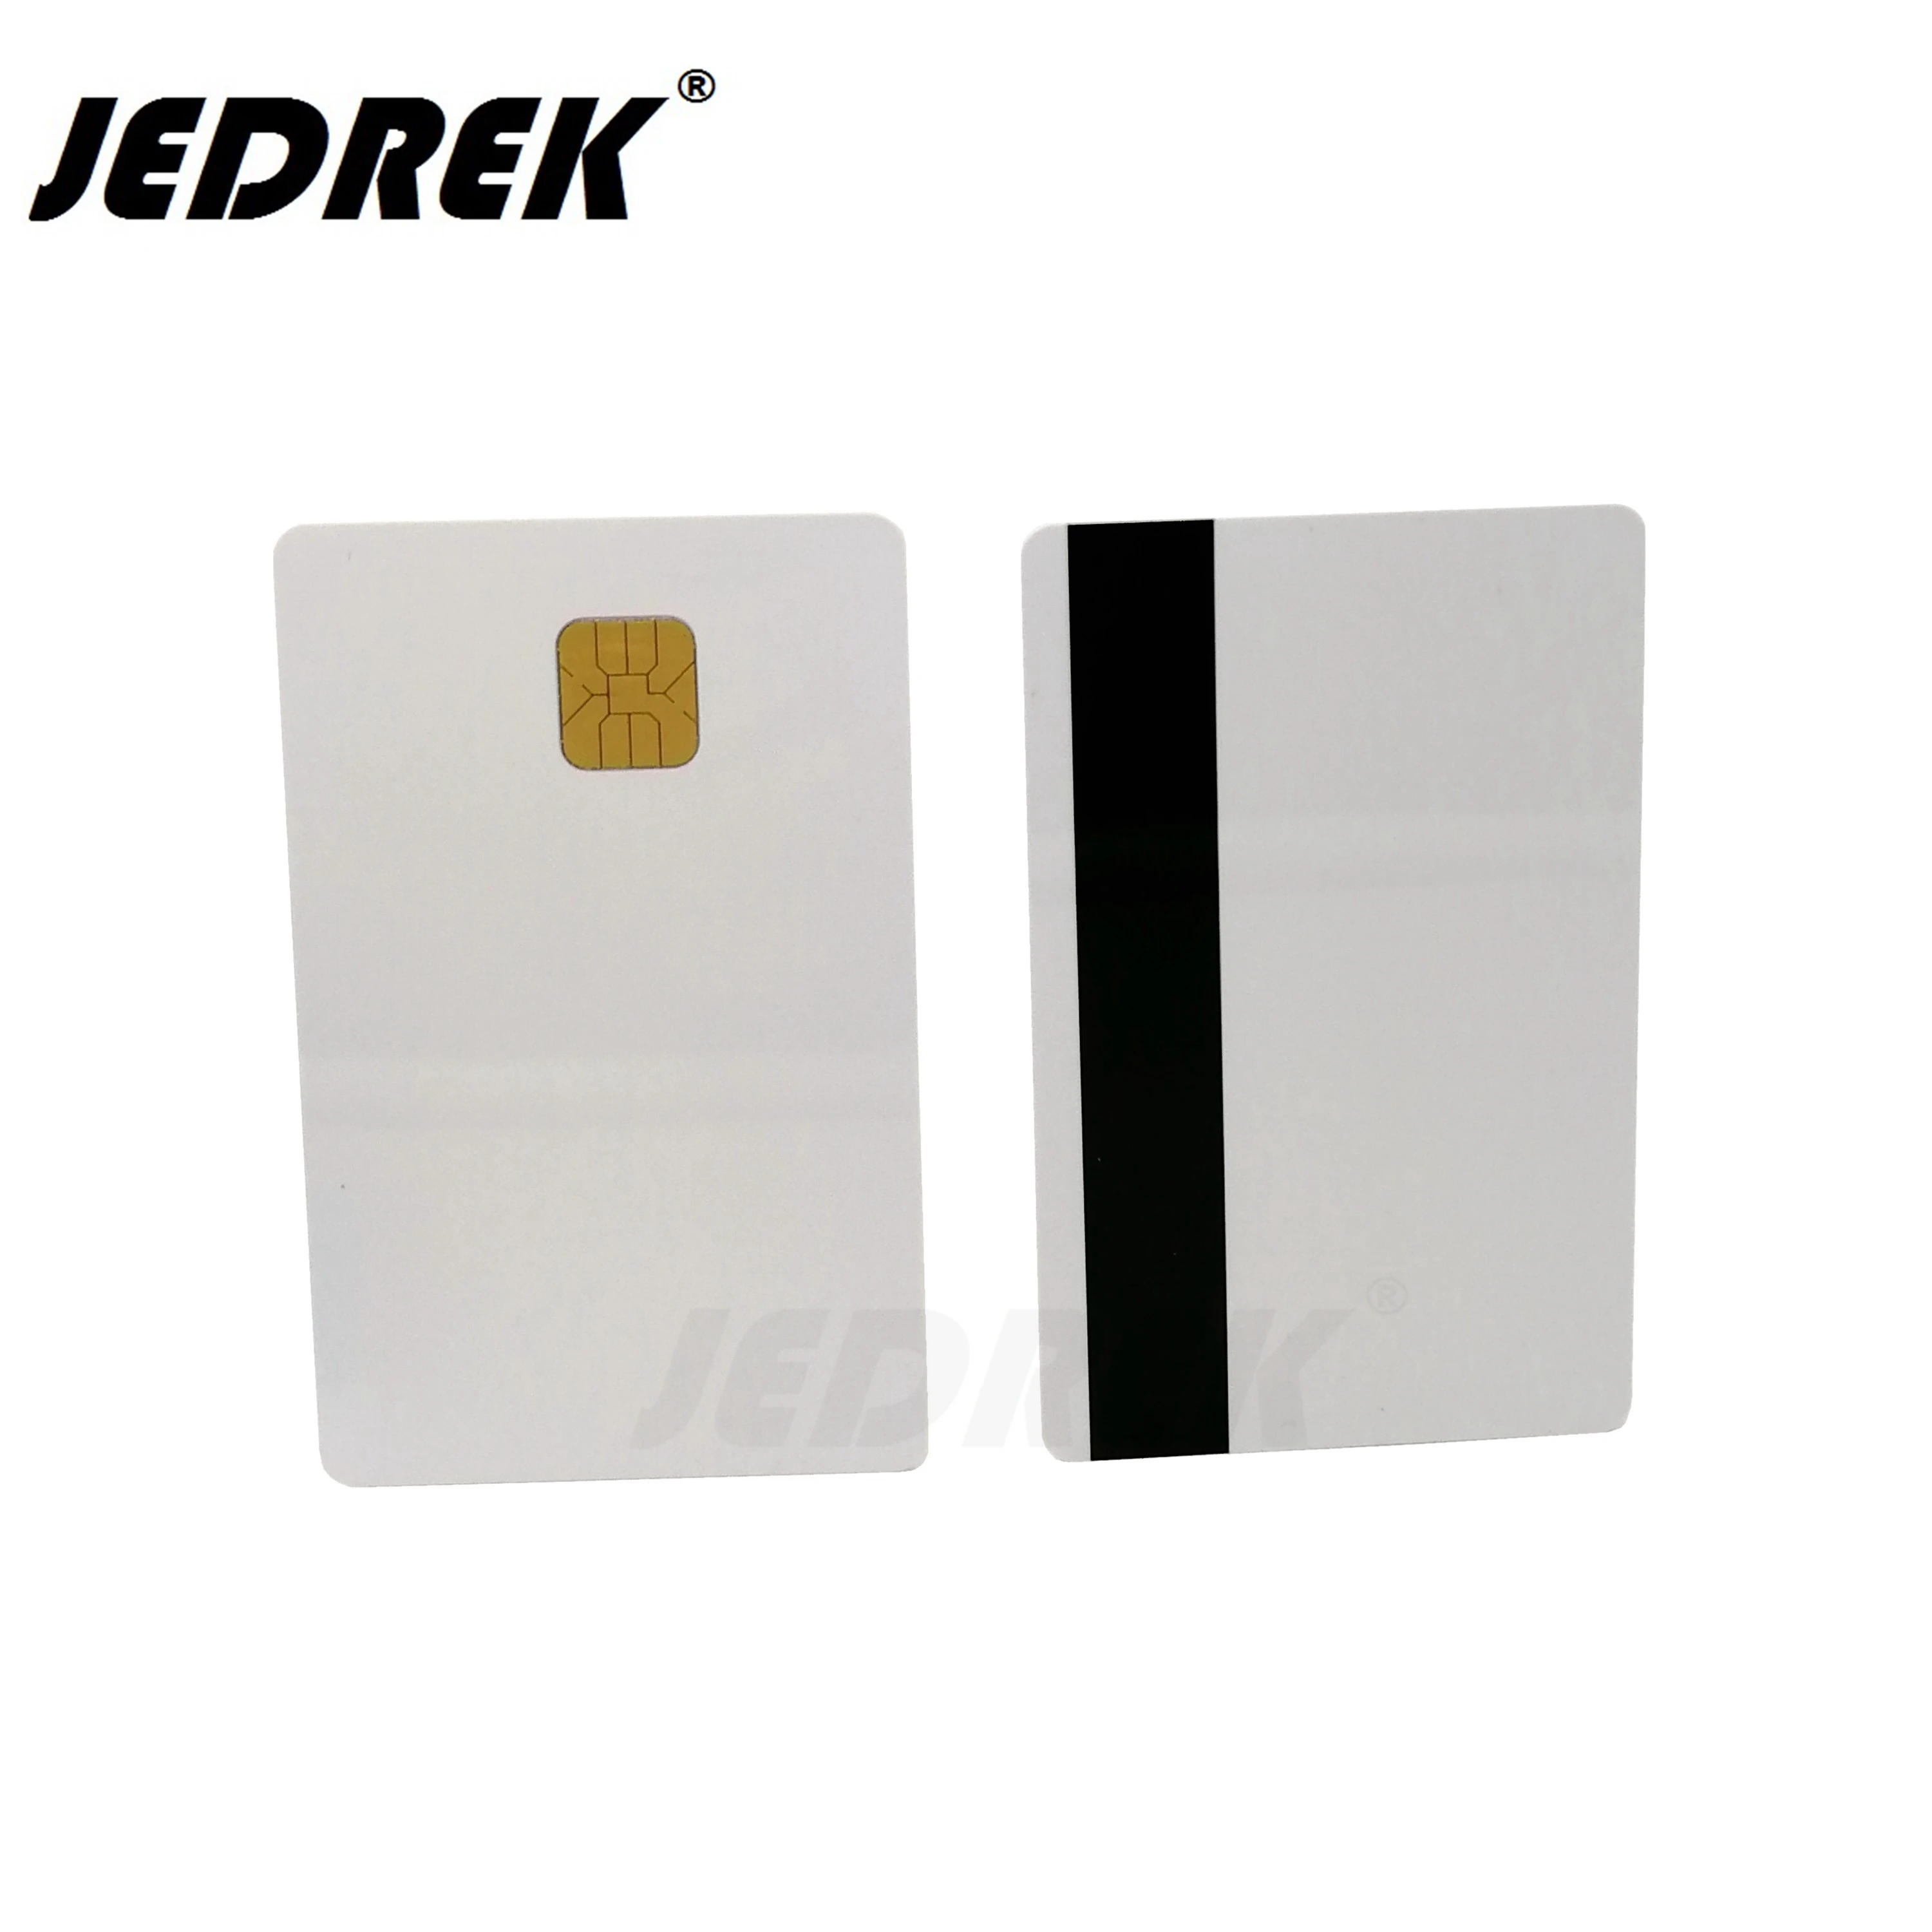 10 Stück leere Smart Card Sle4442 Chip Magnetstreifen Hico 3 Spur Inkjet PVC 